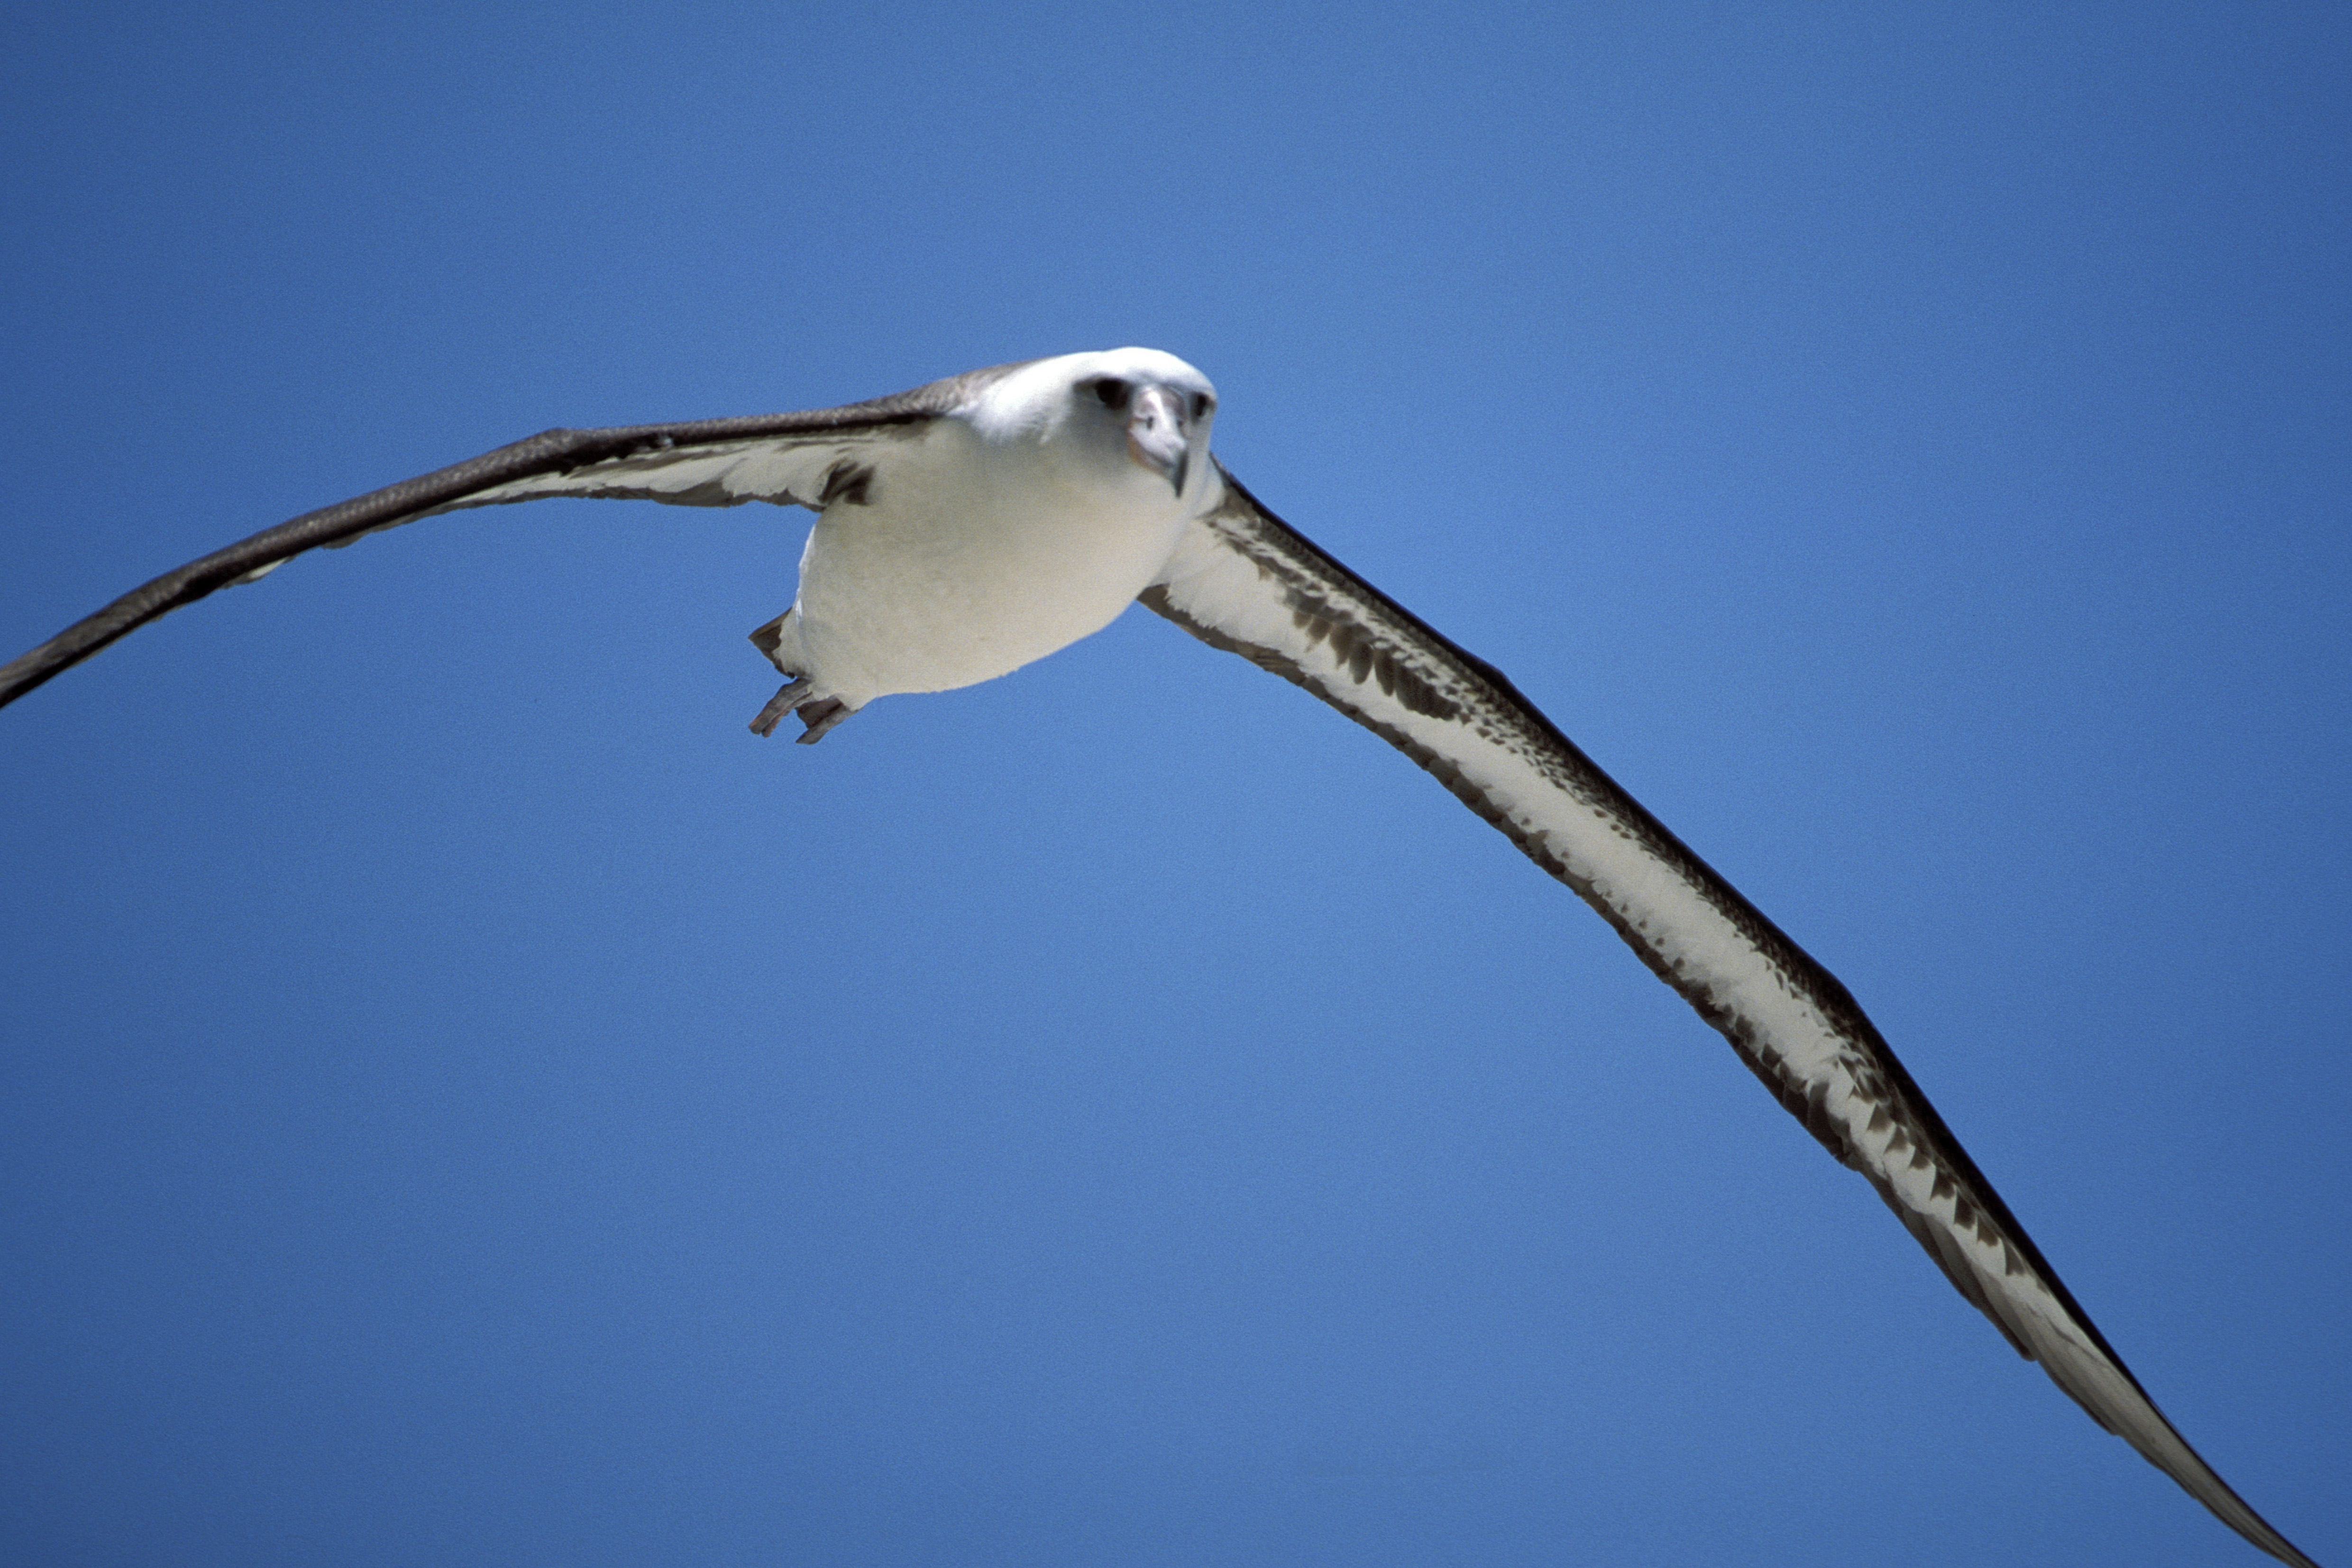 Fliegender Laysan-Albatros (00006620)